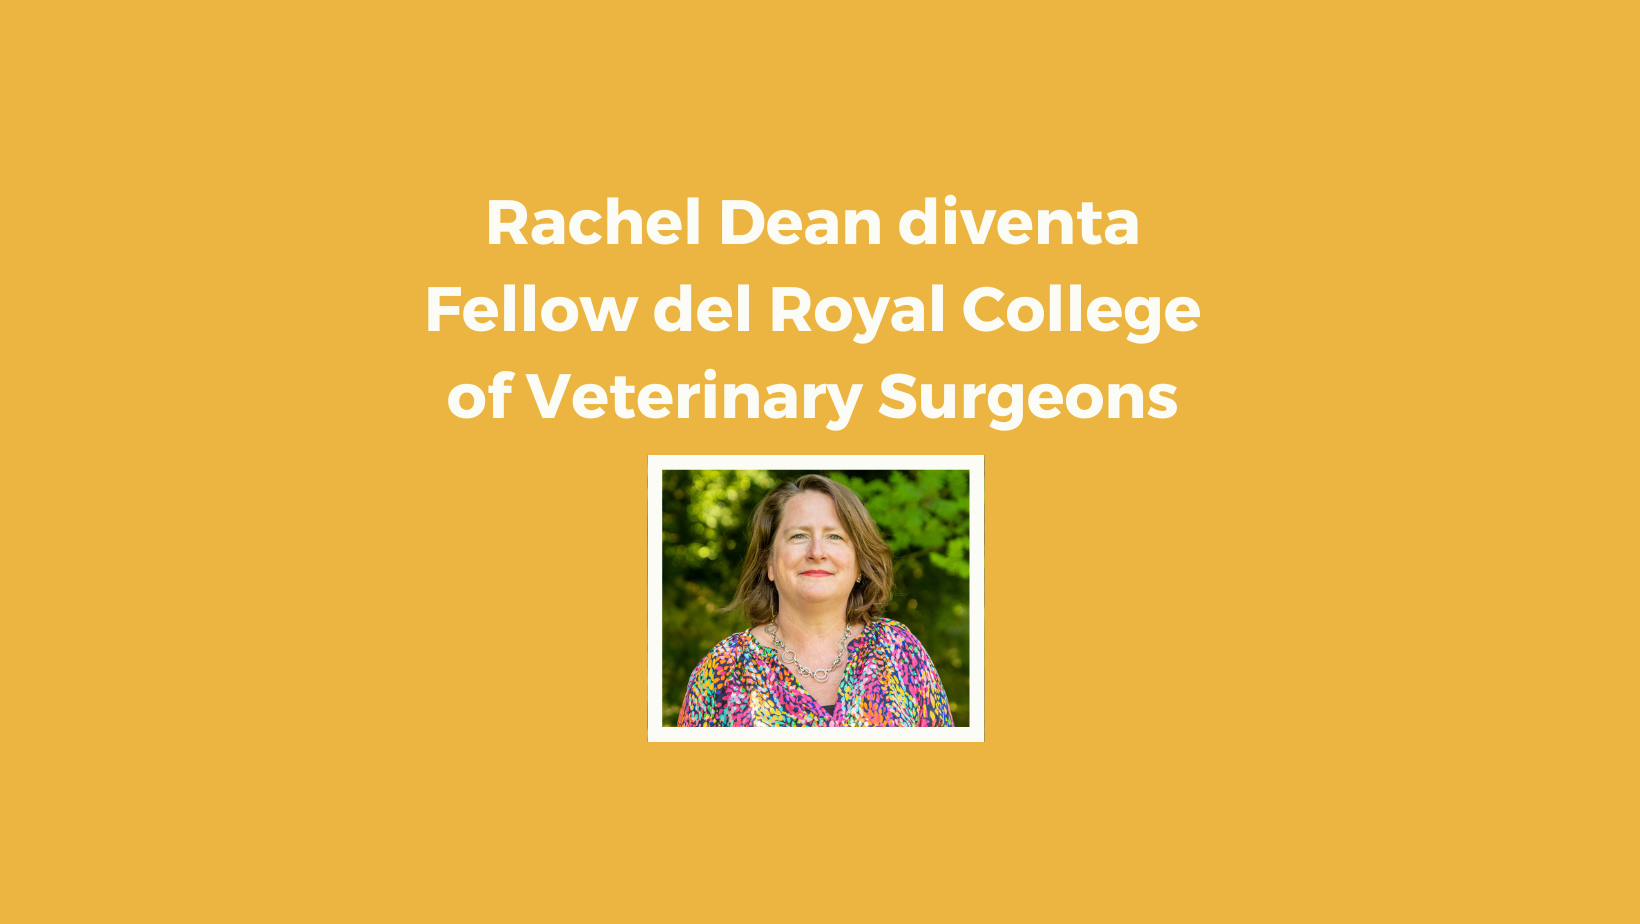 Rachel Dean diventa Fellow del Royal College of Veterinary Surgeons